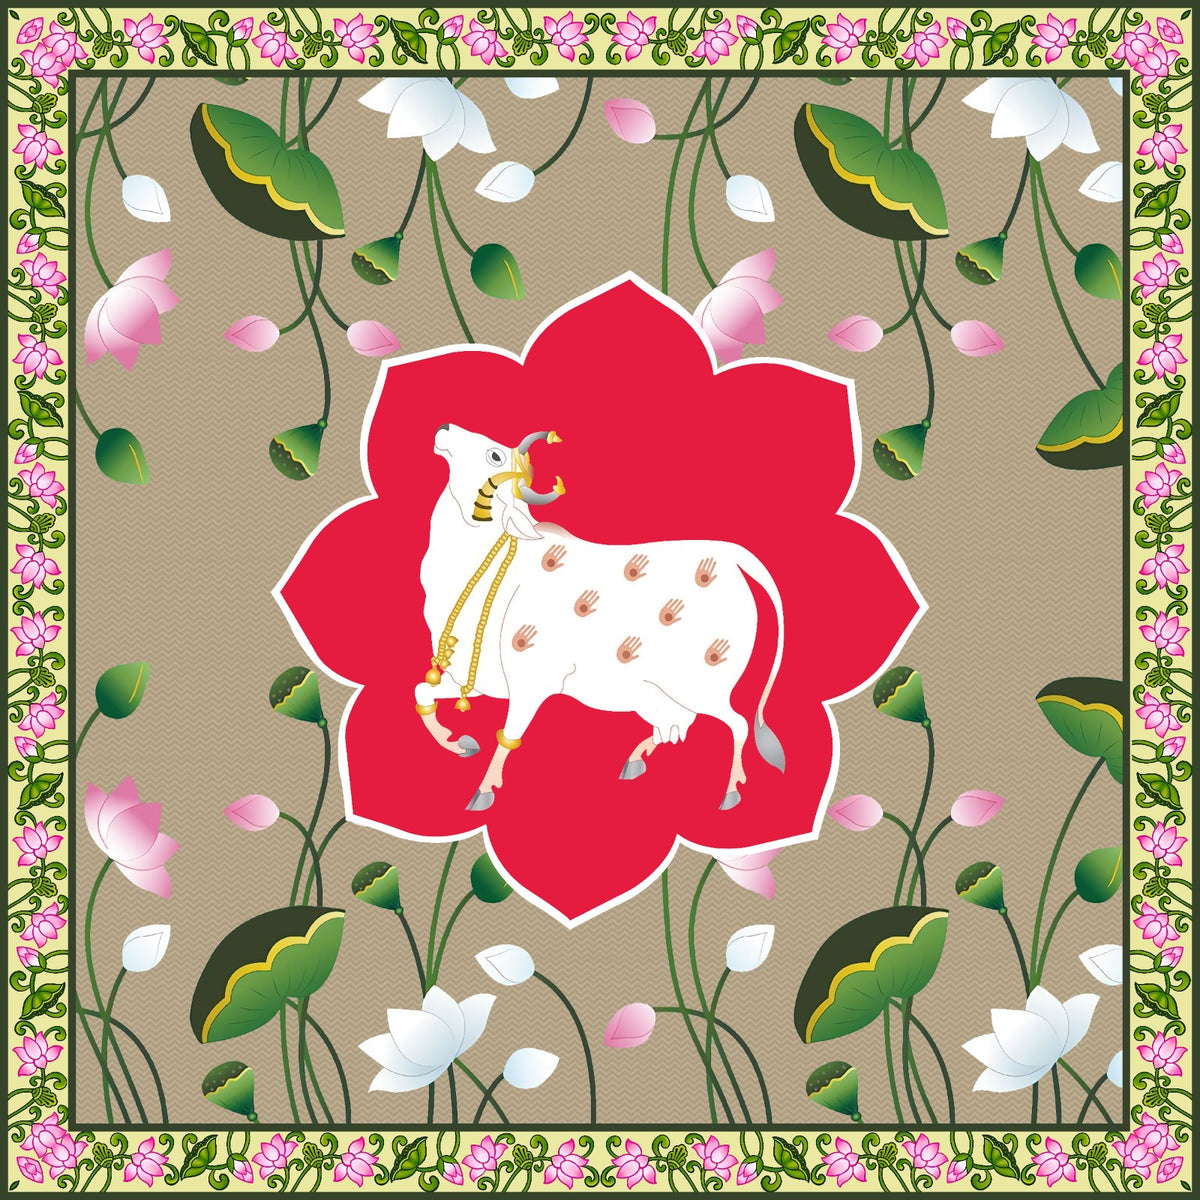 Pichwai Cow and Lotus design backdrop.